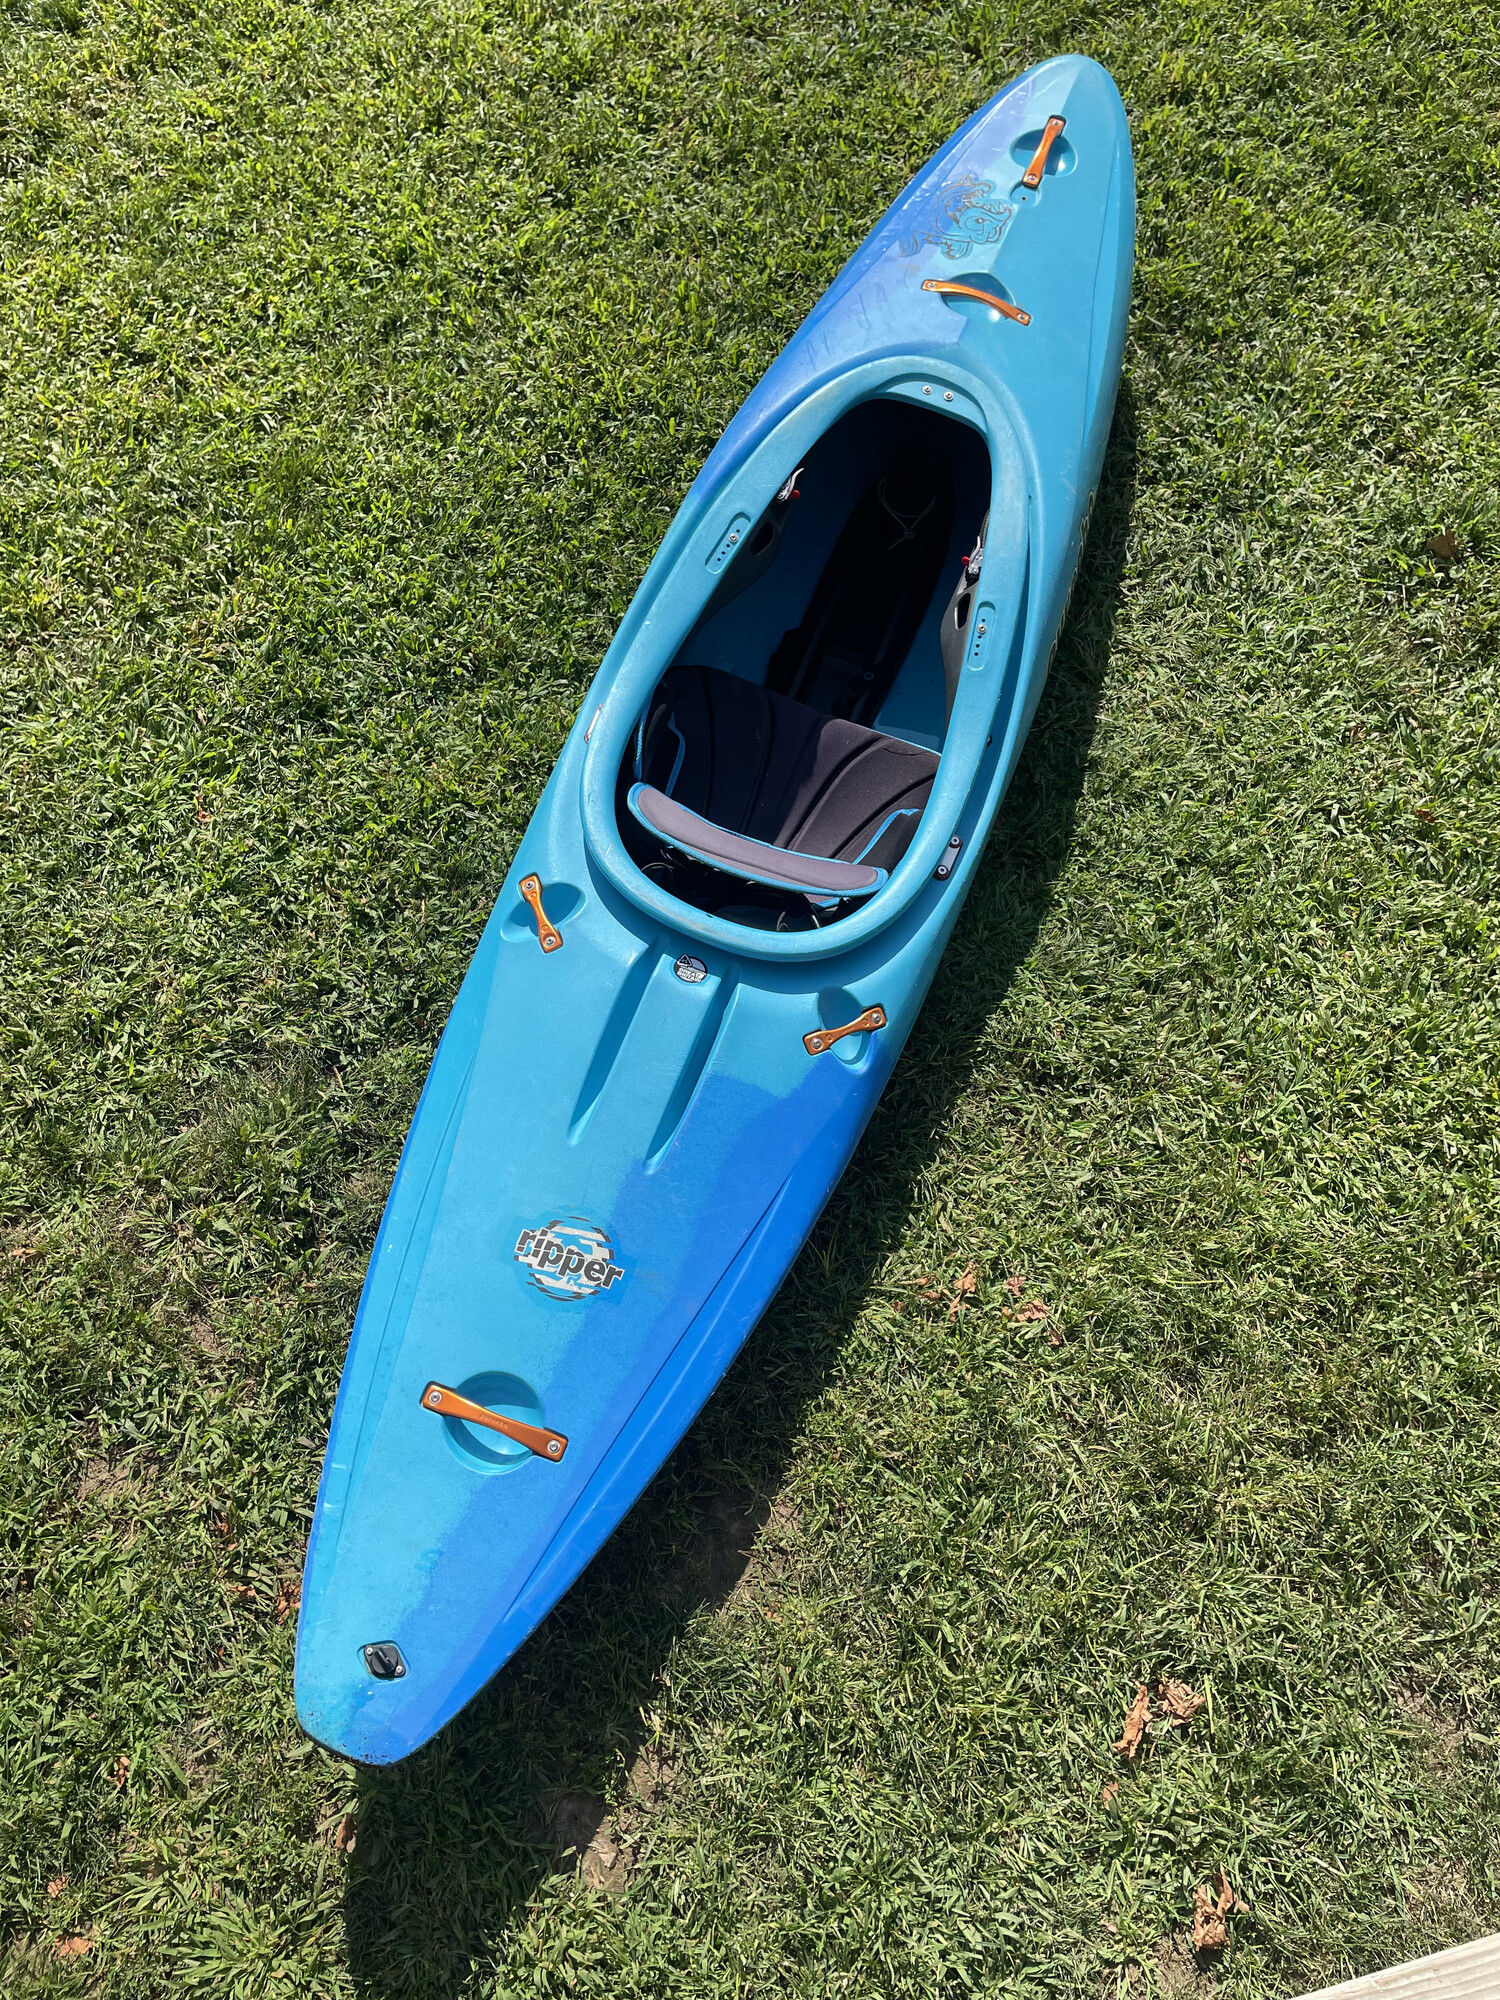 Kayak Outfitting — Canoe Centre